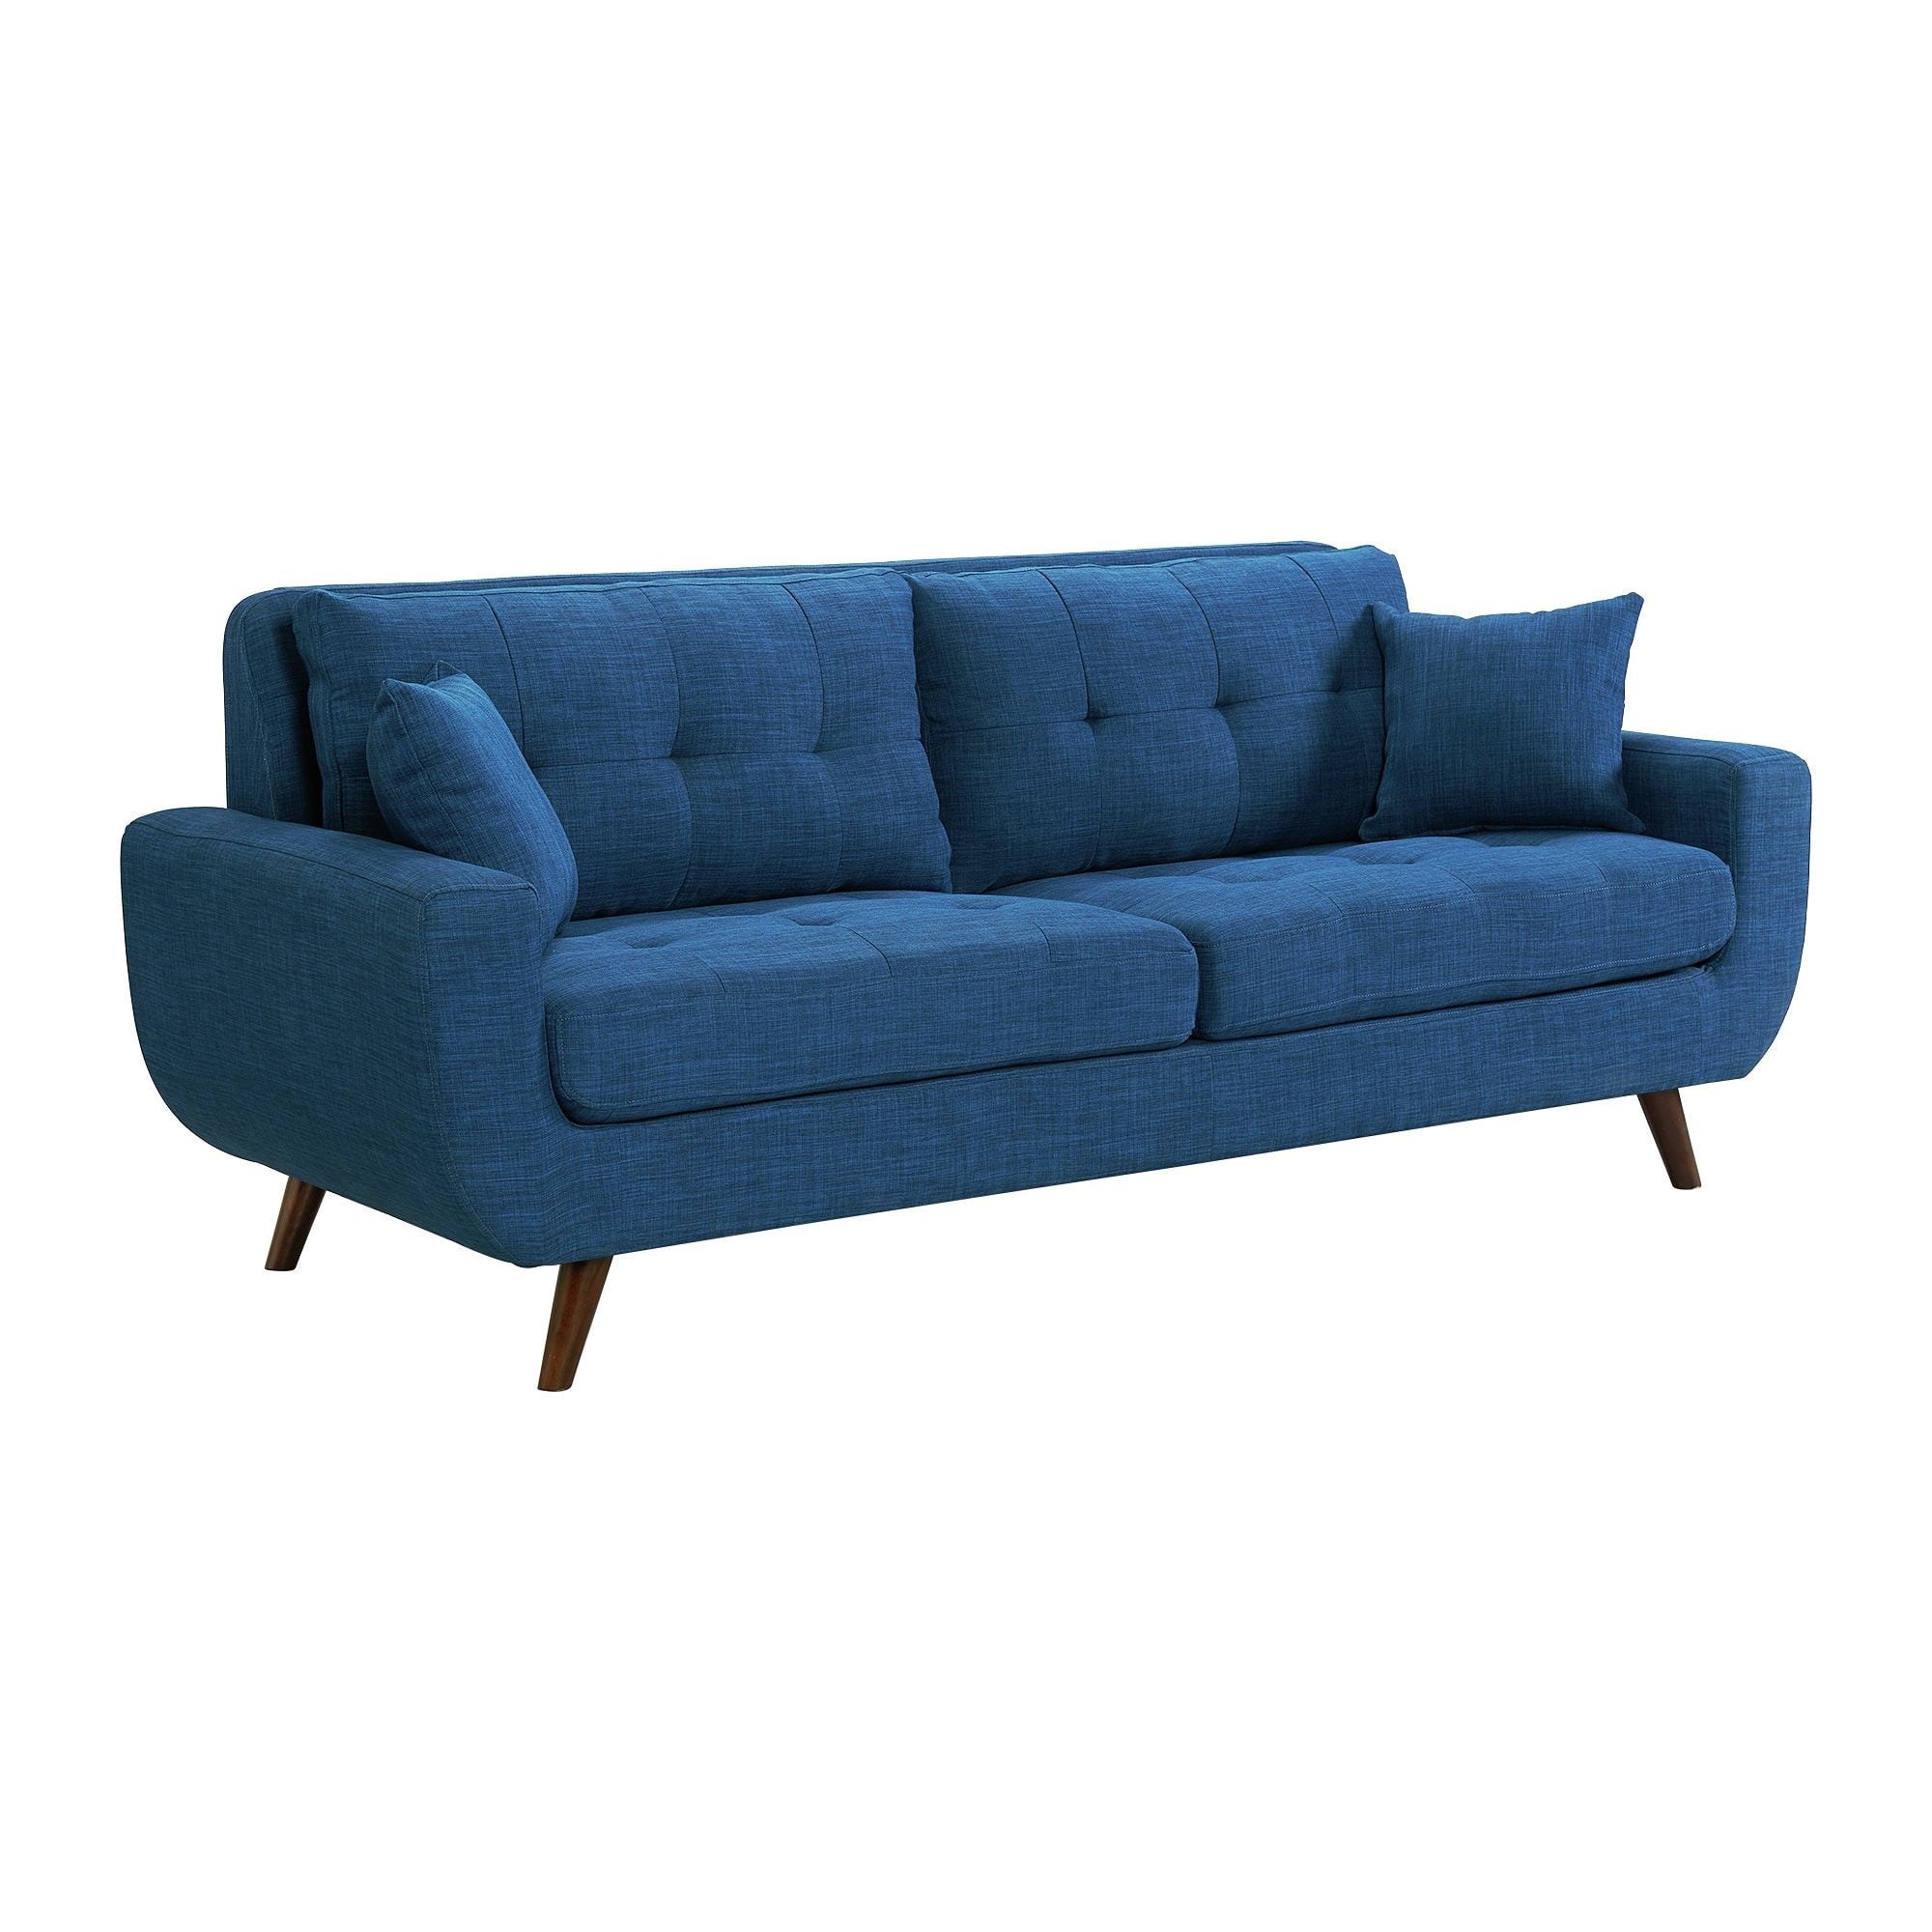 Pitch Blue - Stony Lake Furniture Co